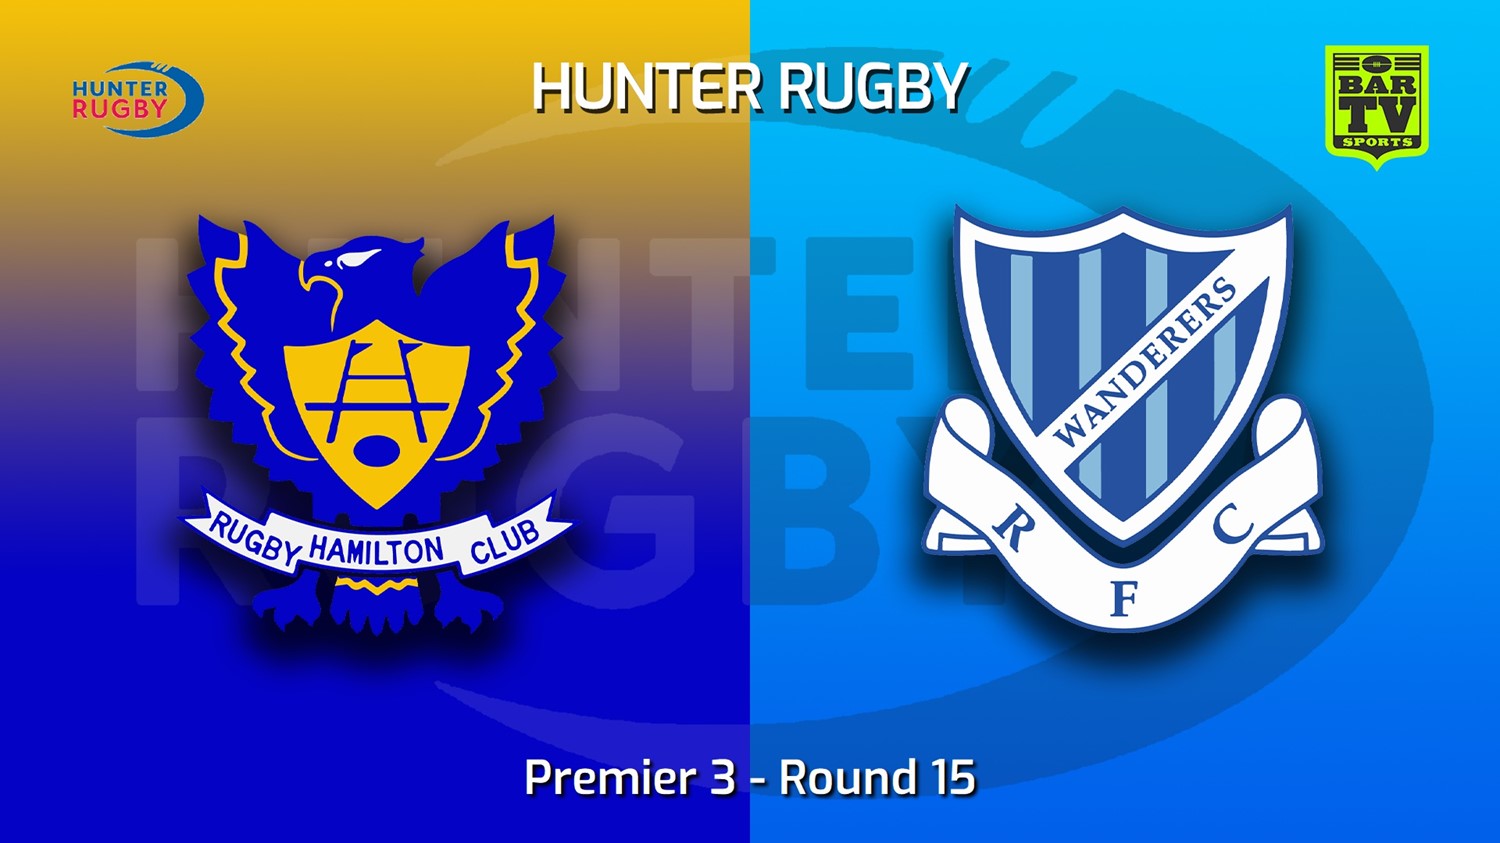 220806-Hunter Rugby Round 15 - Premier 3 - Hamilton Hawks v Wanderers Slate Image